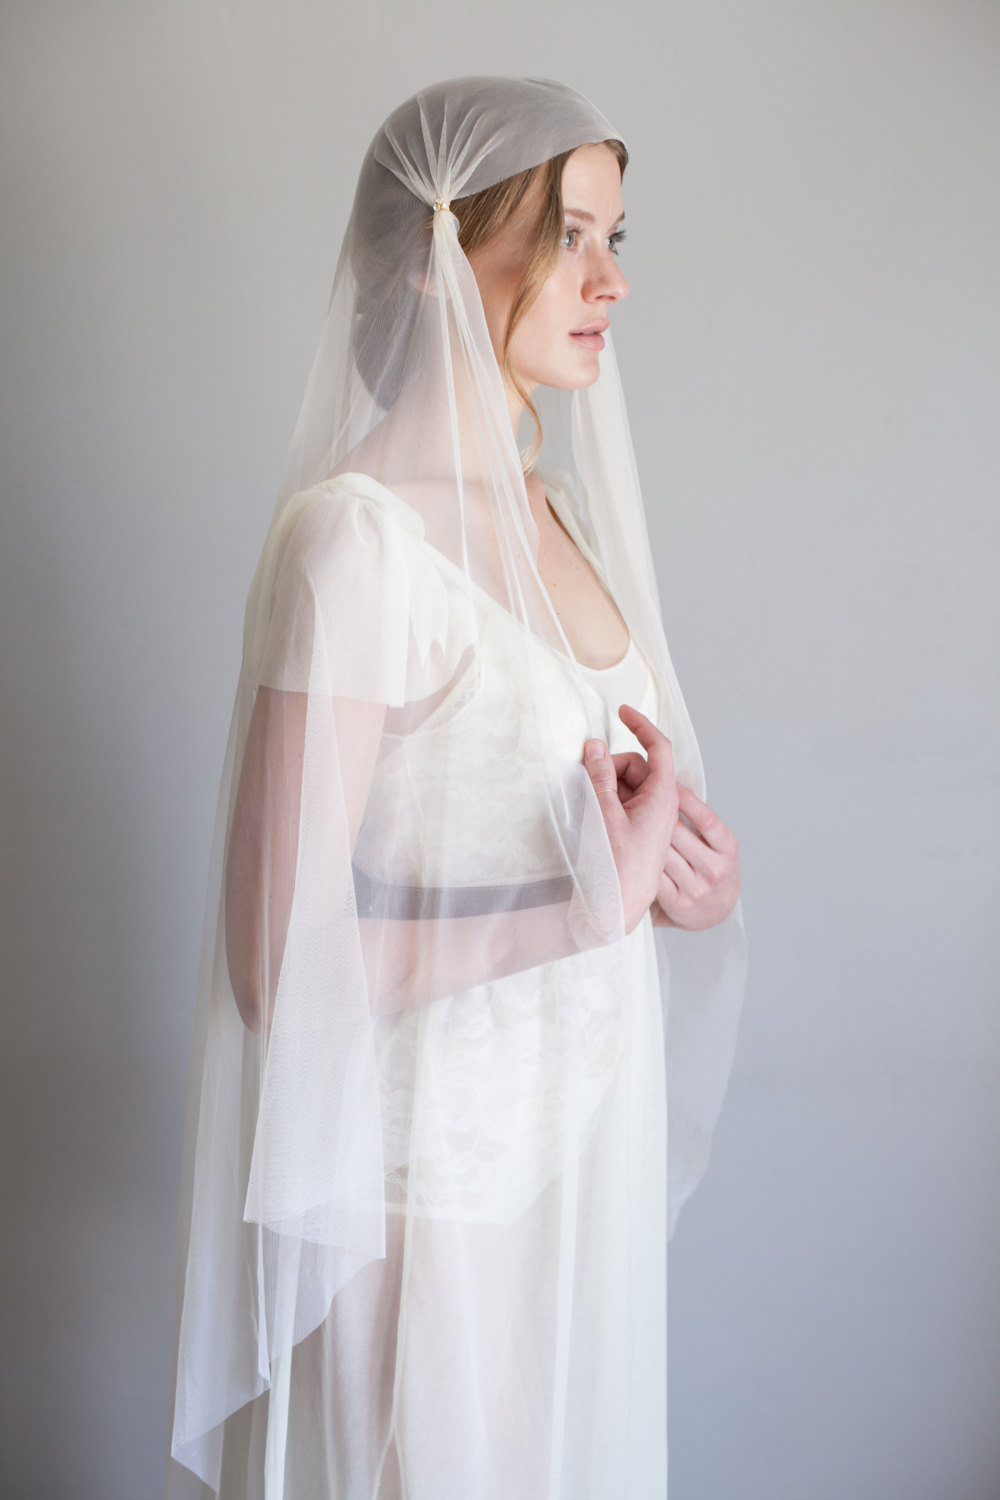 Mignonne Handmade's 2014 Bridal Accessories - Juliet Cap Veil